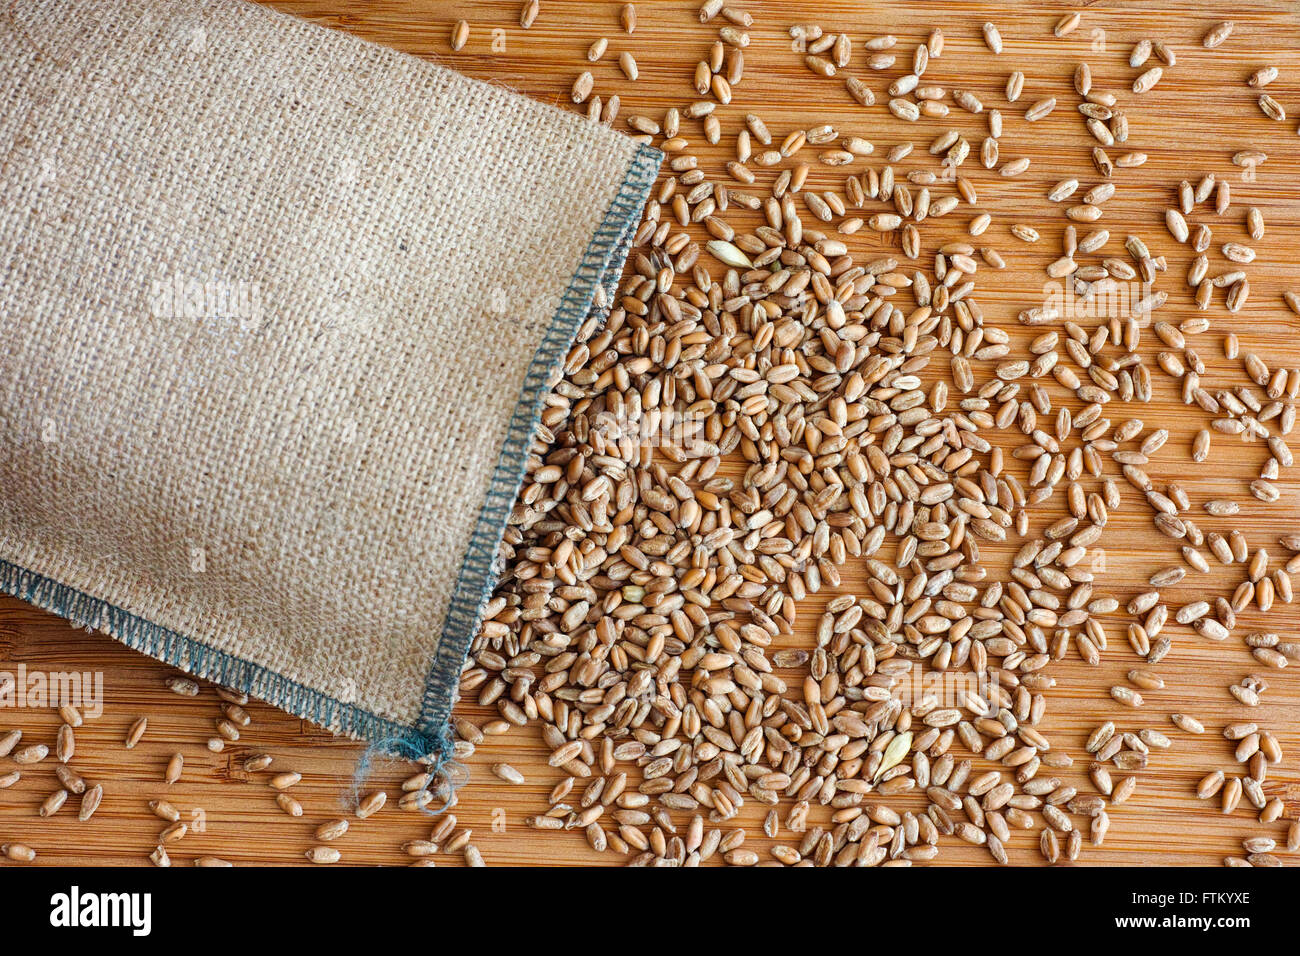 Whole wheat grain kernels spilling out of burlap bag. Close up. Stock Photo